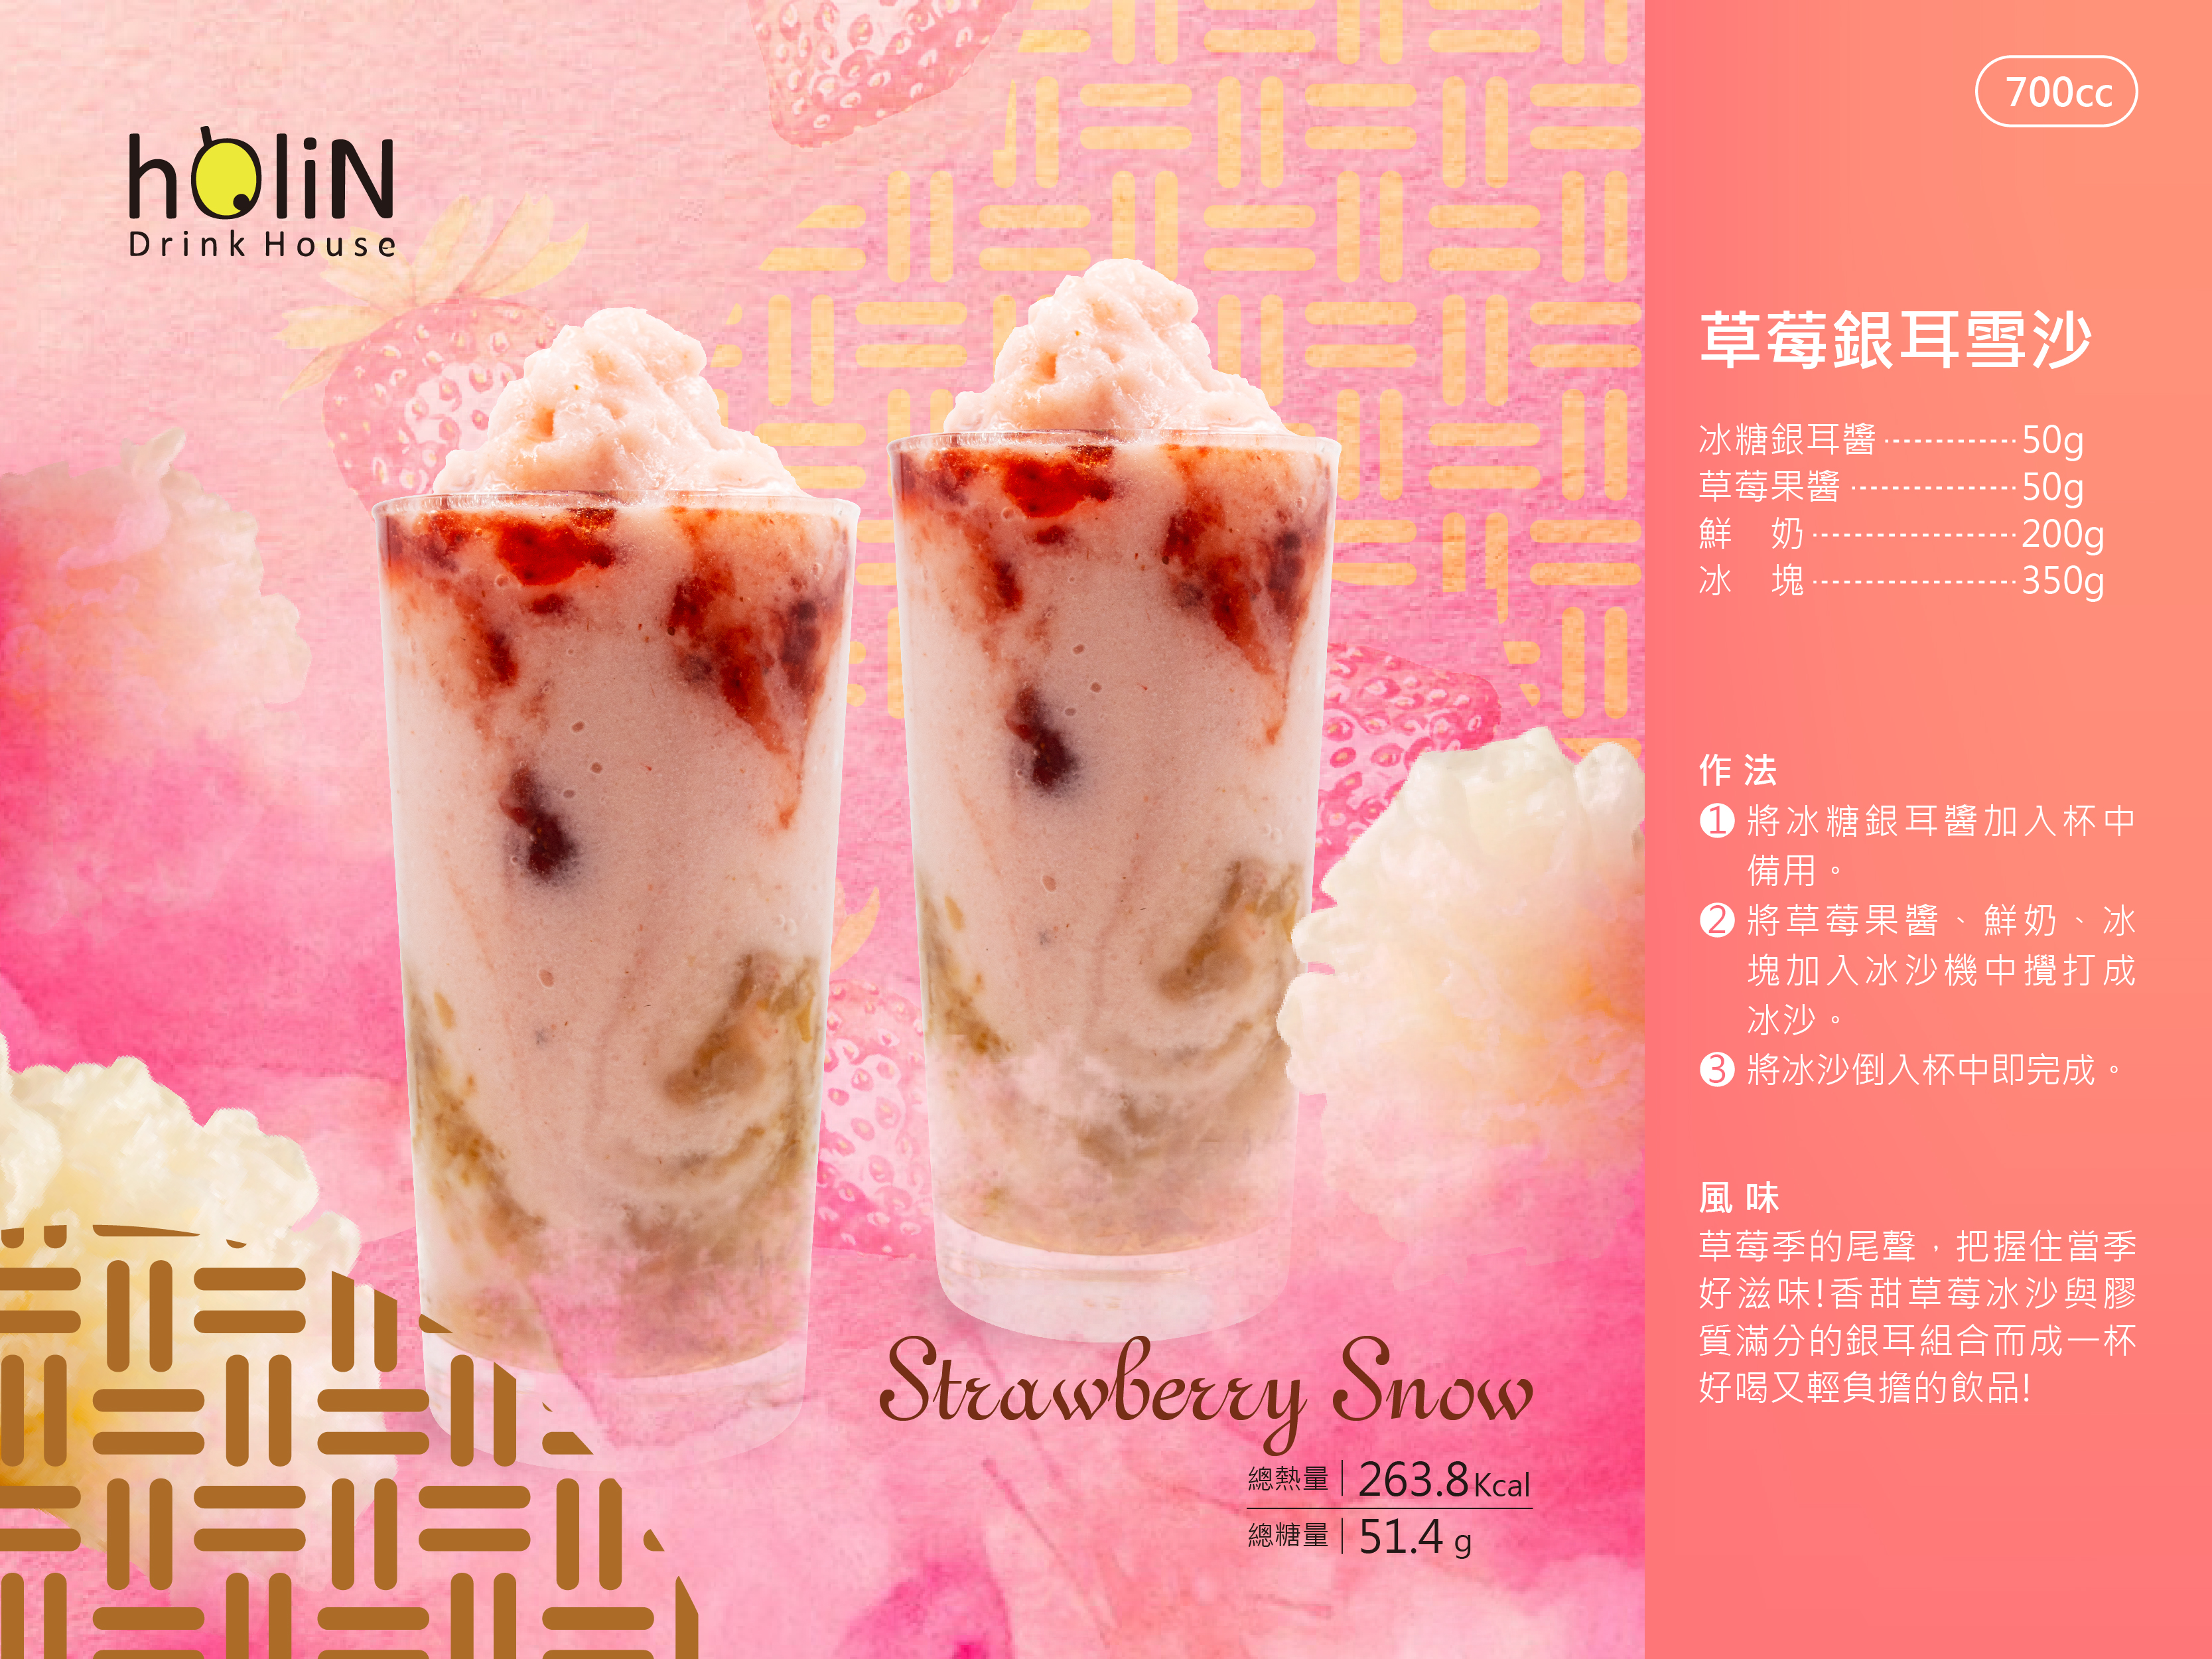 Strawberry Snow - Strawberry Smoothie,Strawberry jam,how to make bubble tea,tapioca recipe,bubble tea store,bubble tea